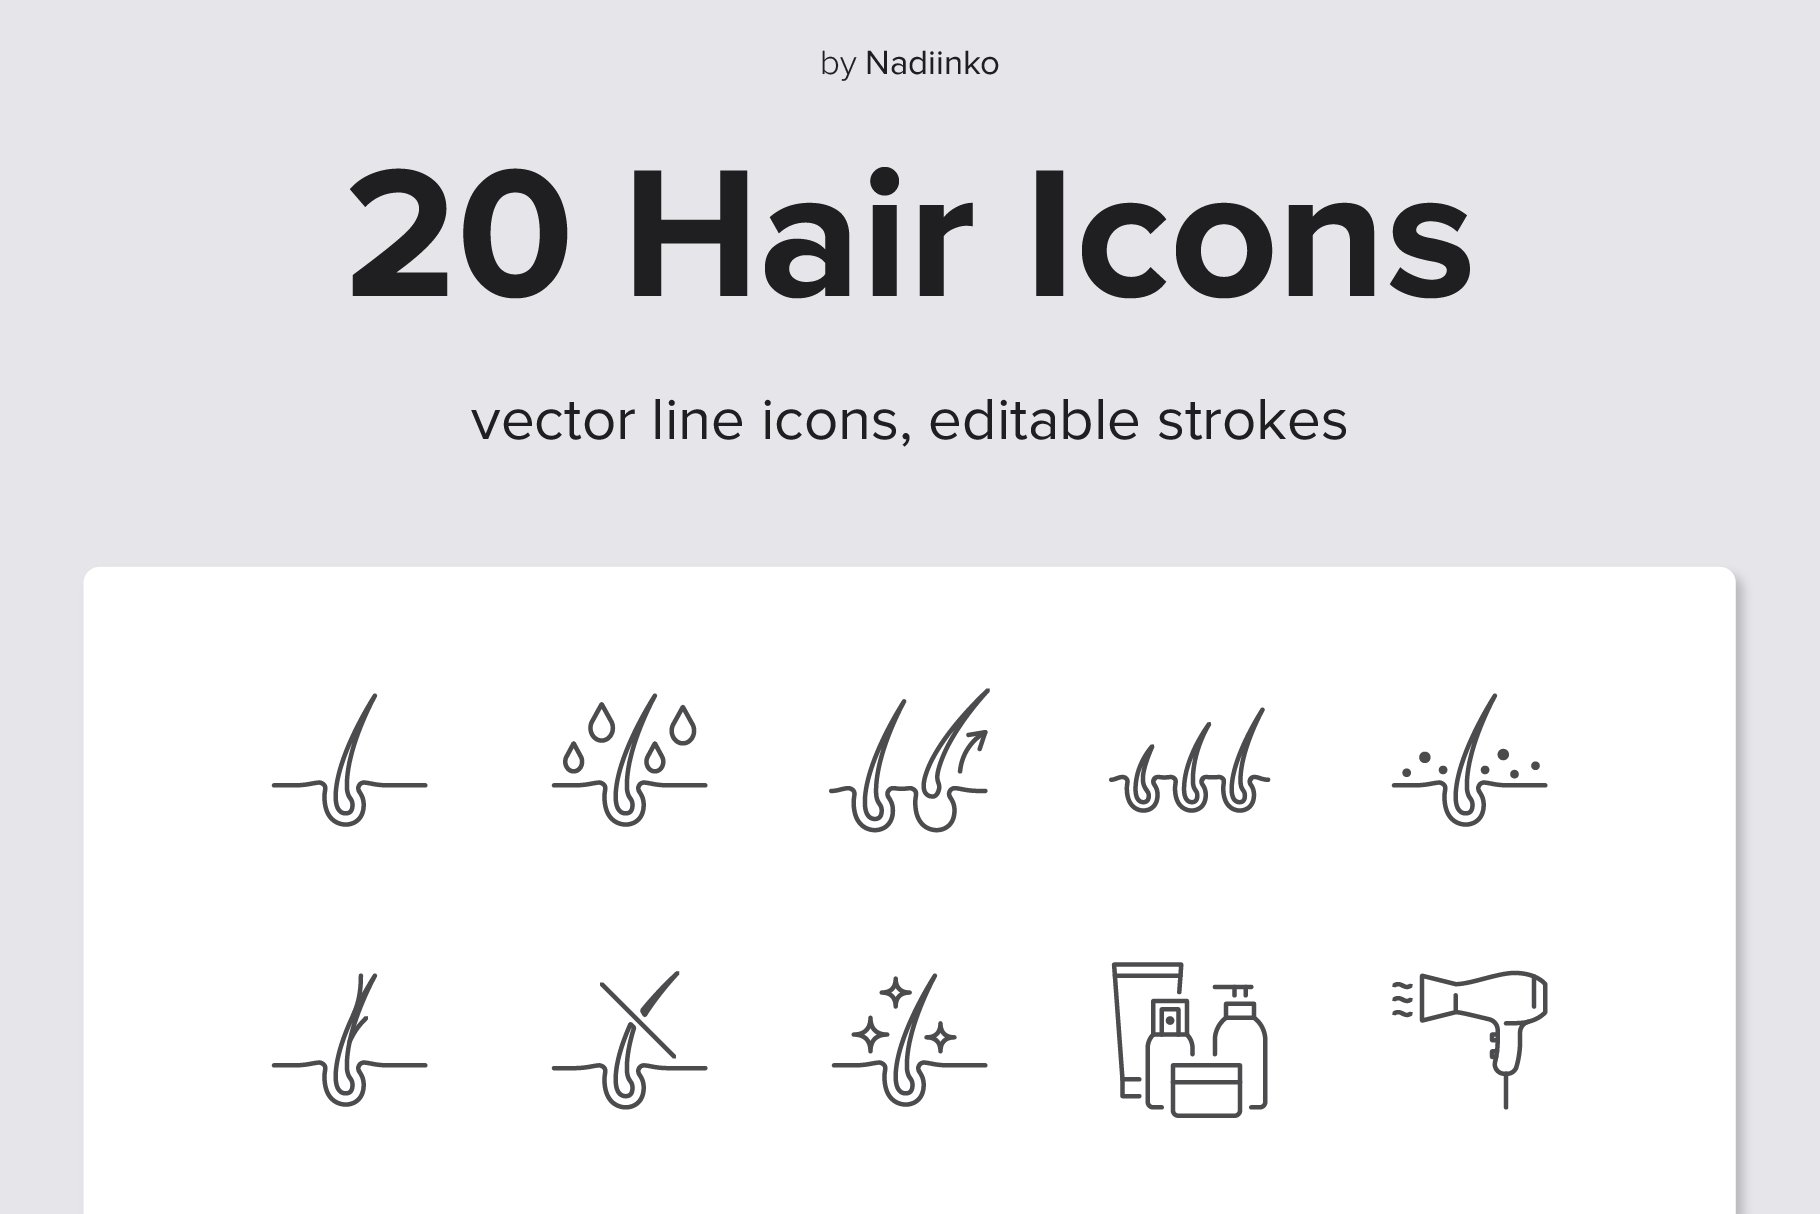 Hair Shampoo Line Icons cover image.